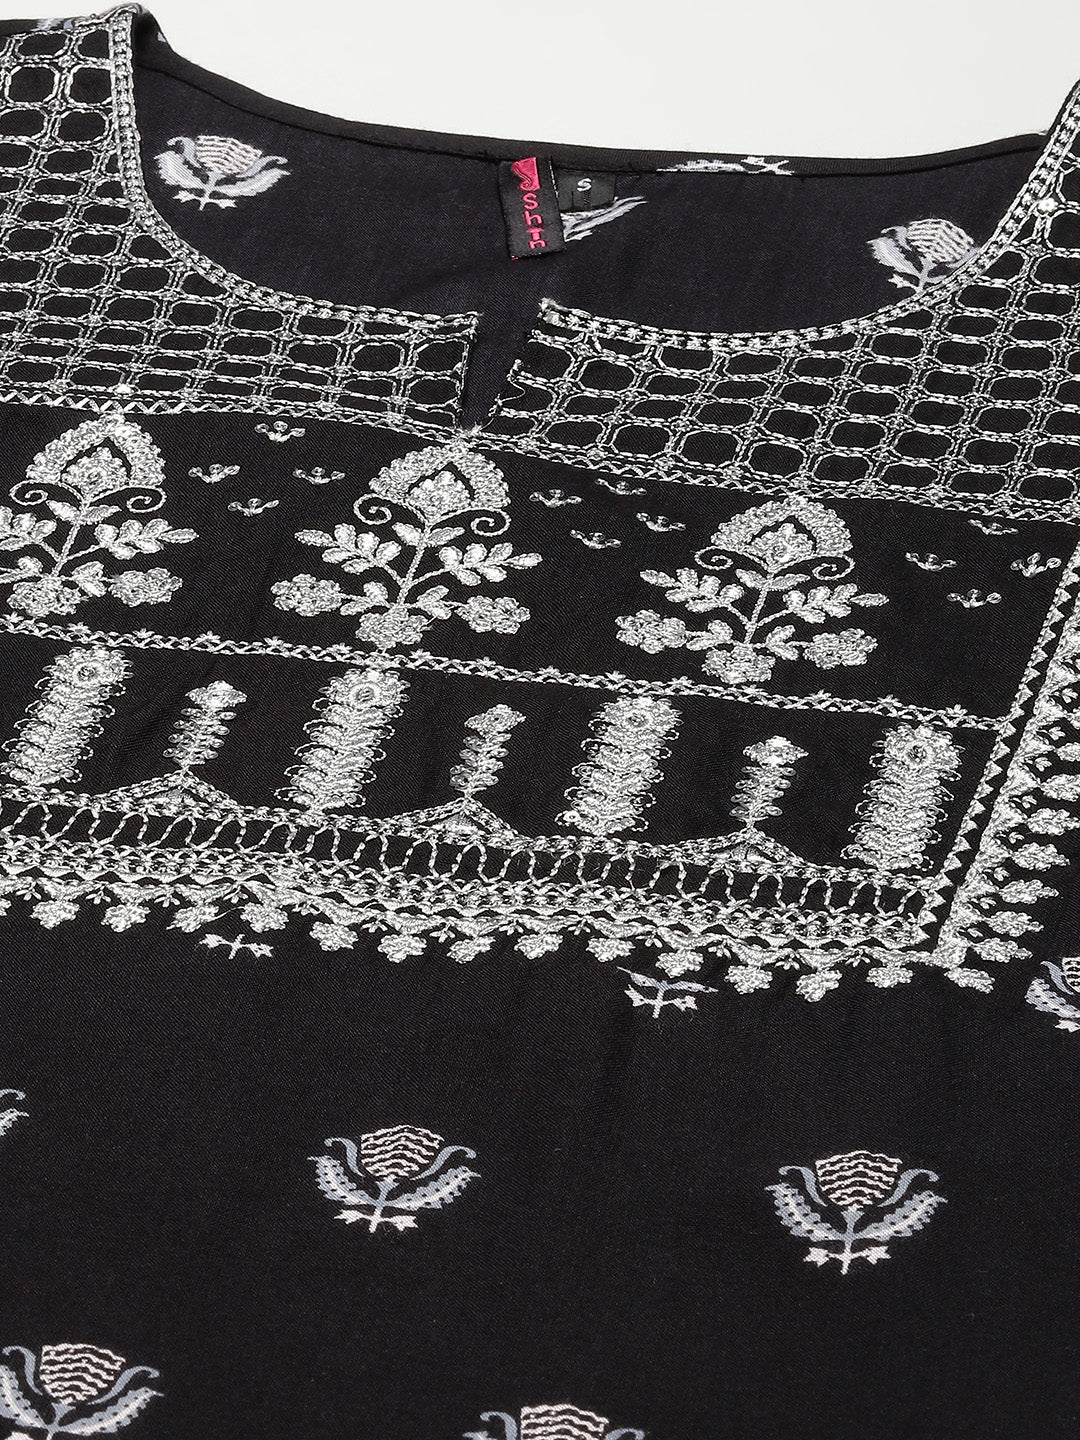 Ishin Women's Black Embroidered A-line Kurta with Sharara & Dupatta